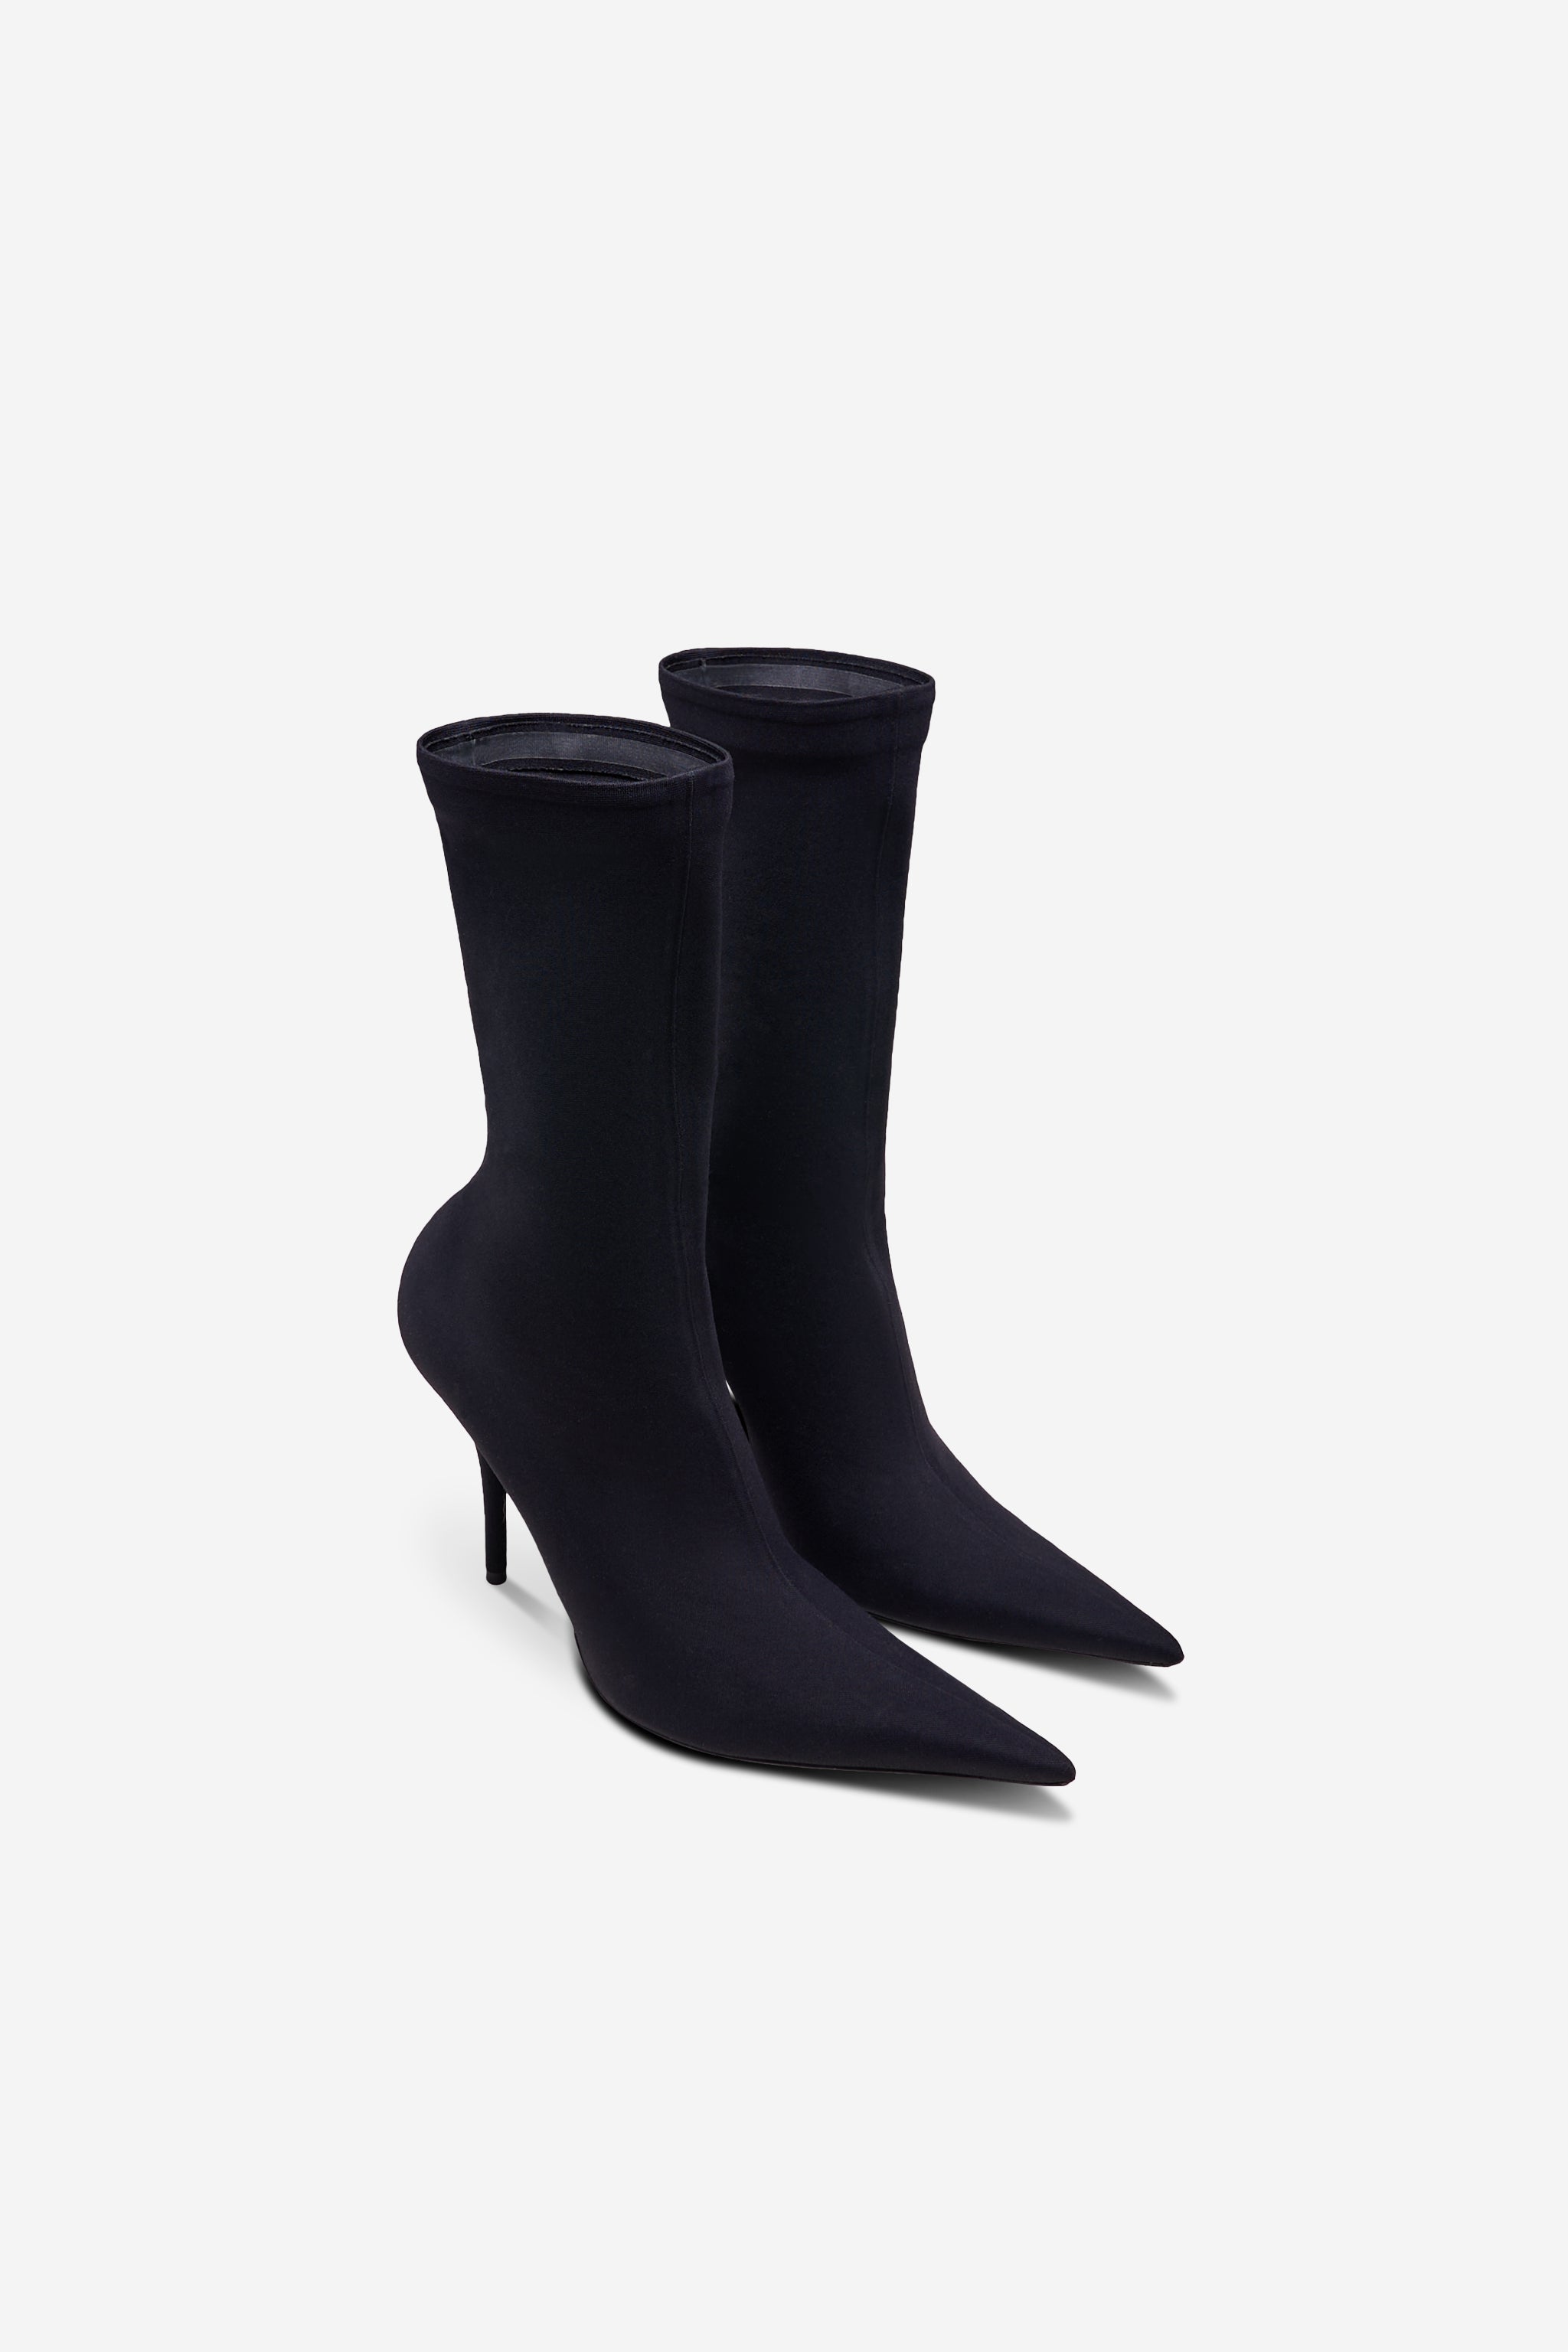 Balenciaga black ankle boots